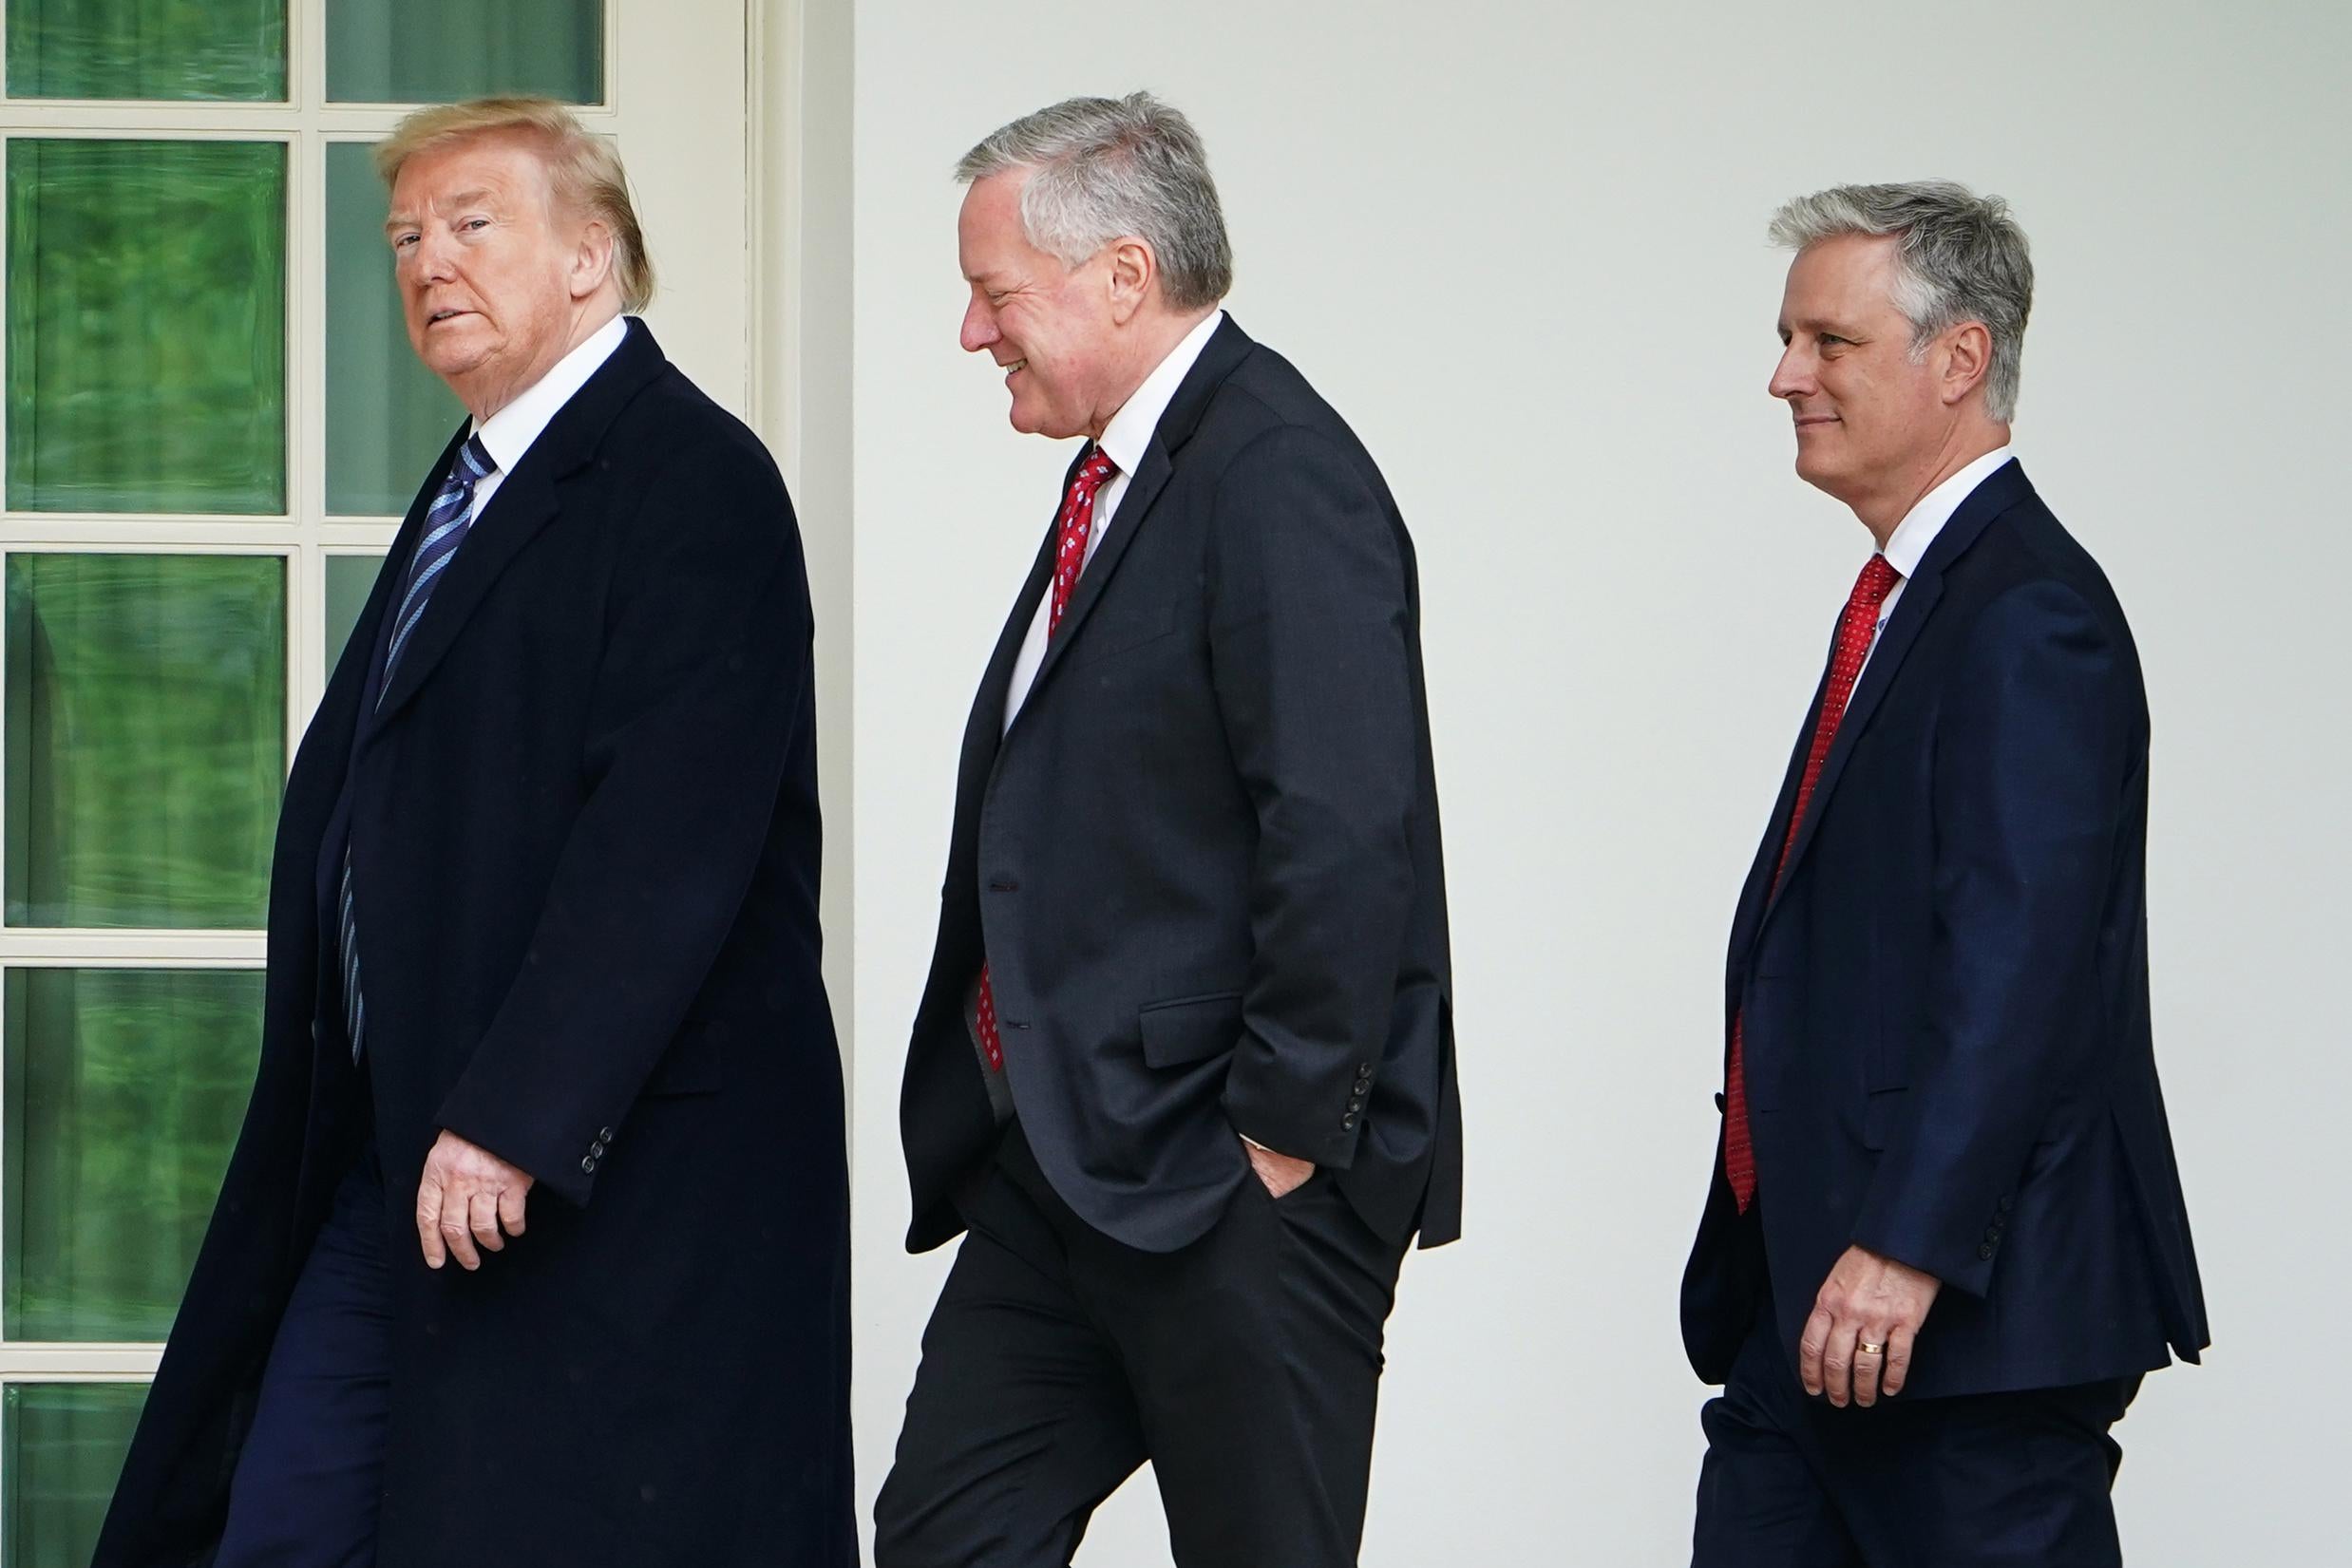 Trump, Mark Meadows, and Robert O'Brien all walk outside the White House.